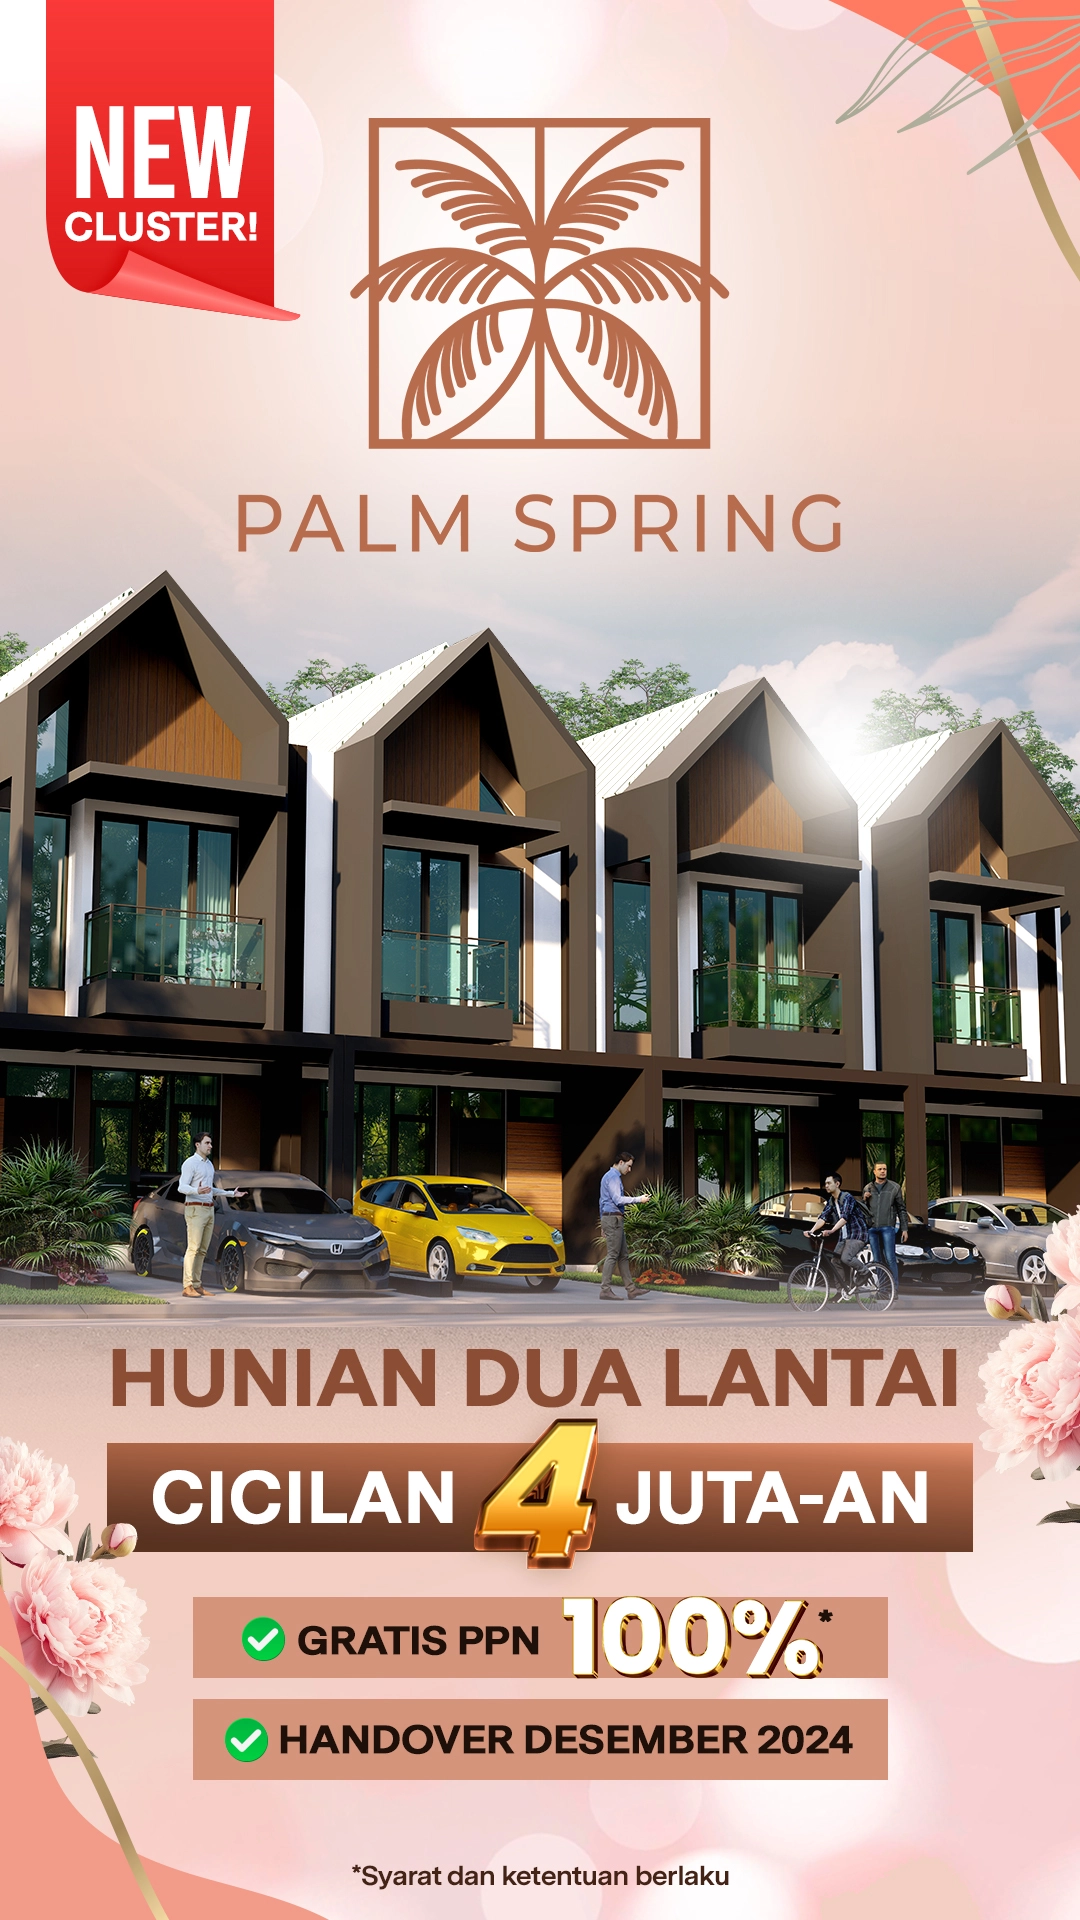 Palm Spring BSA Land